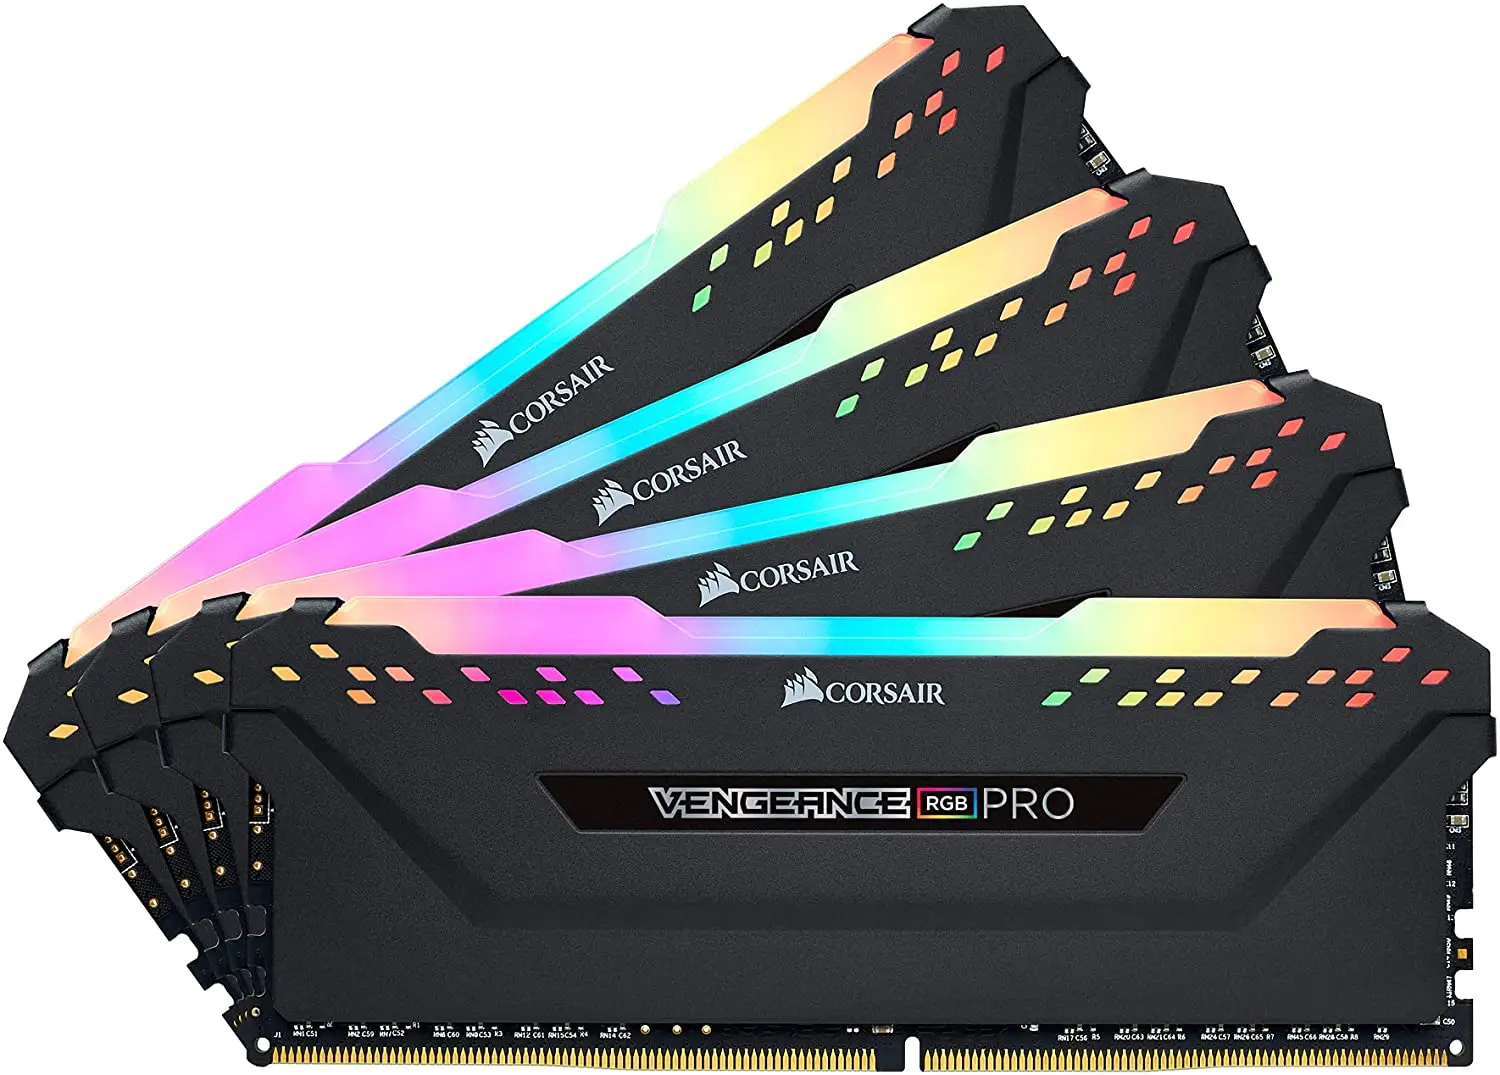 

Corsair Vengeance RGB Pro 64GB (4x16GB) DDR4 3200 (PC4-25600) C16 Desktop Memory Black